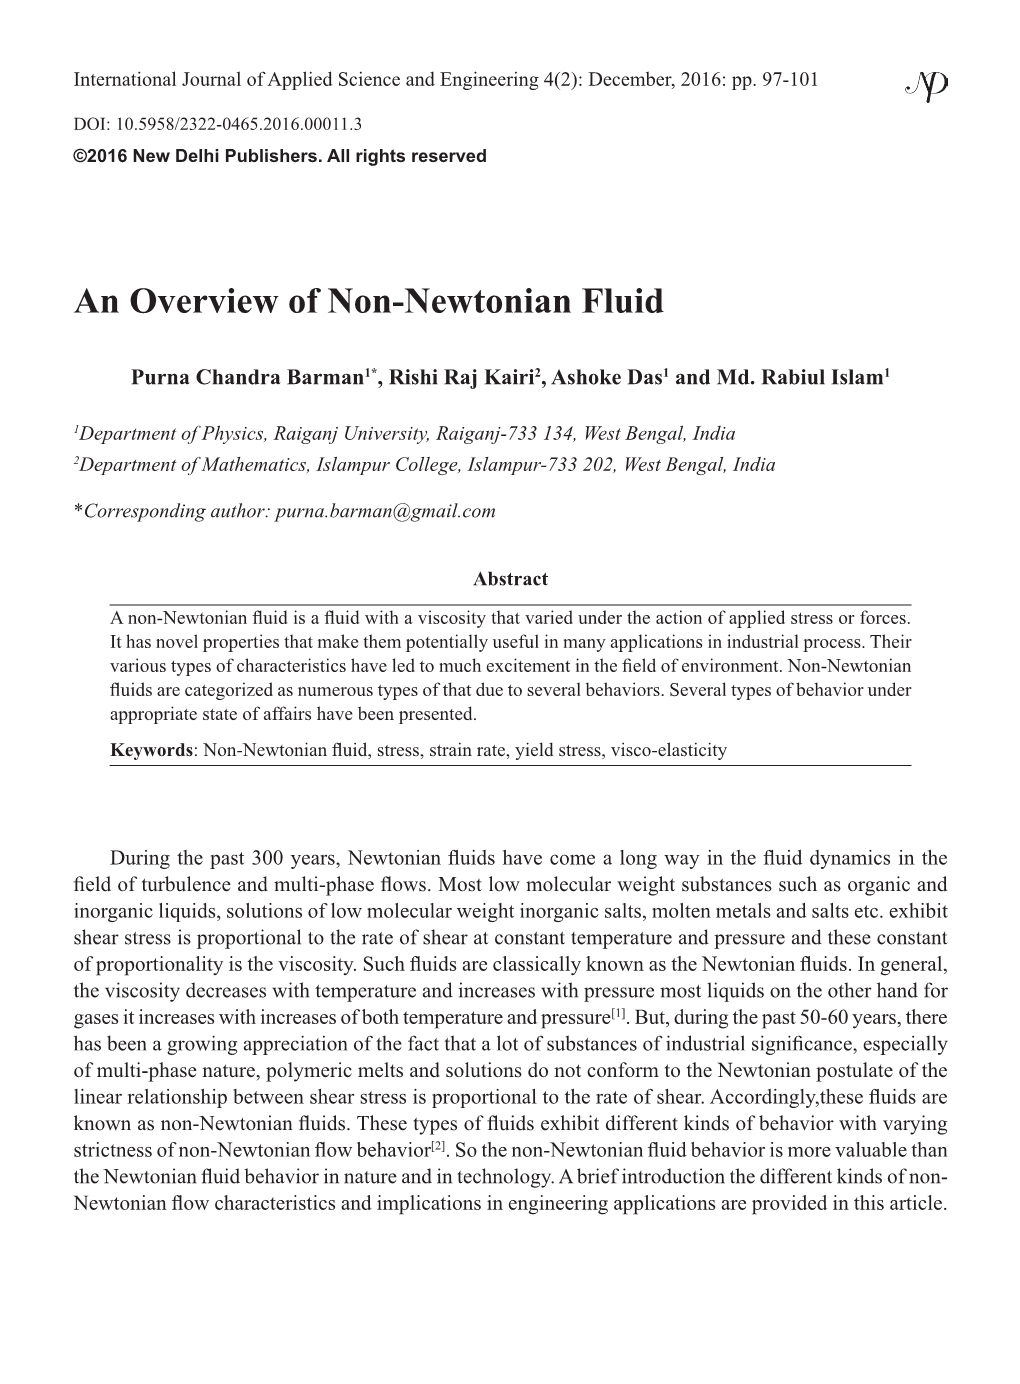 An Overview of Non-Newtonian Fluid